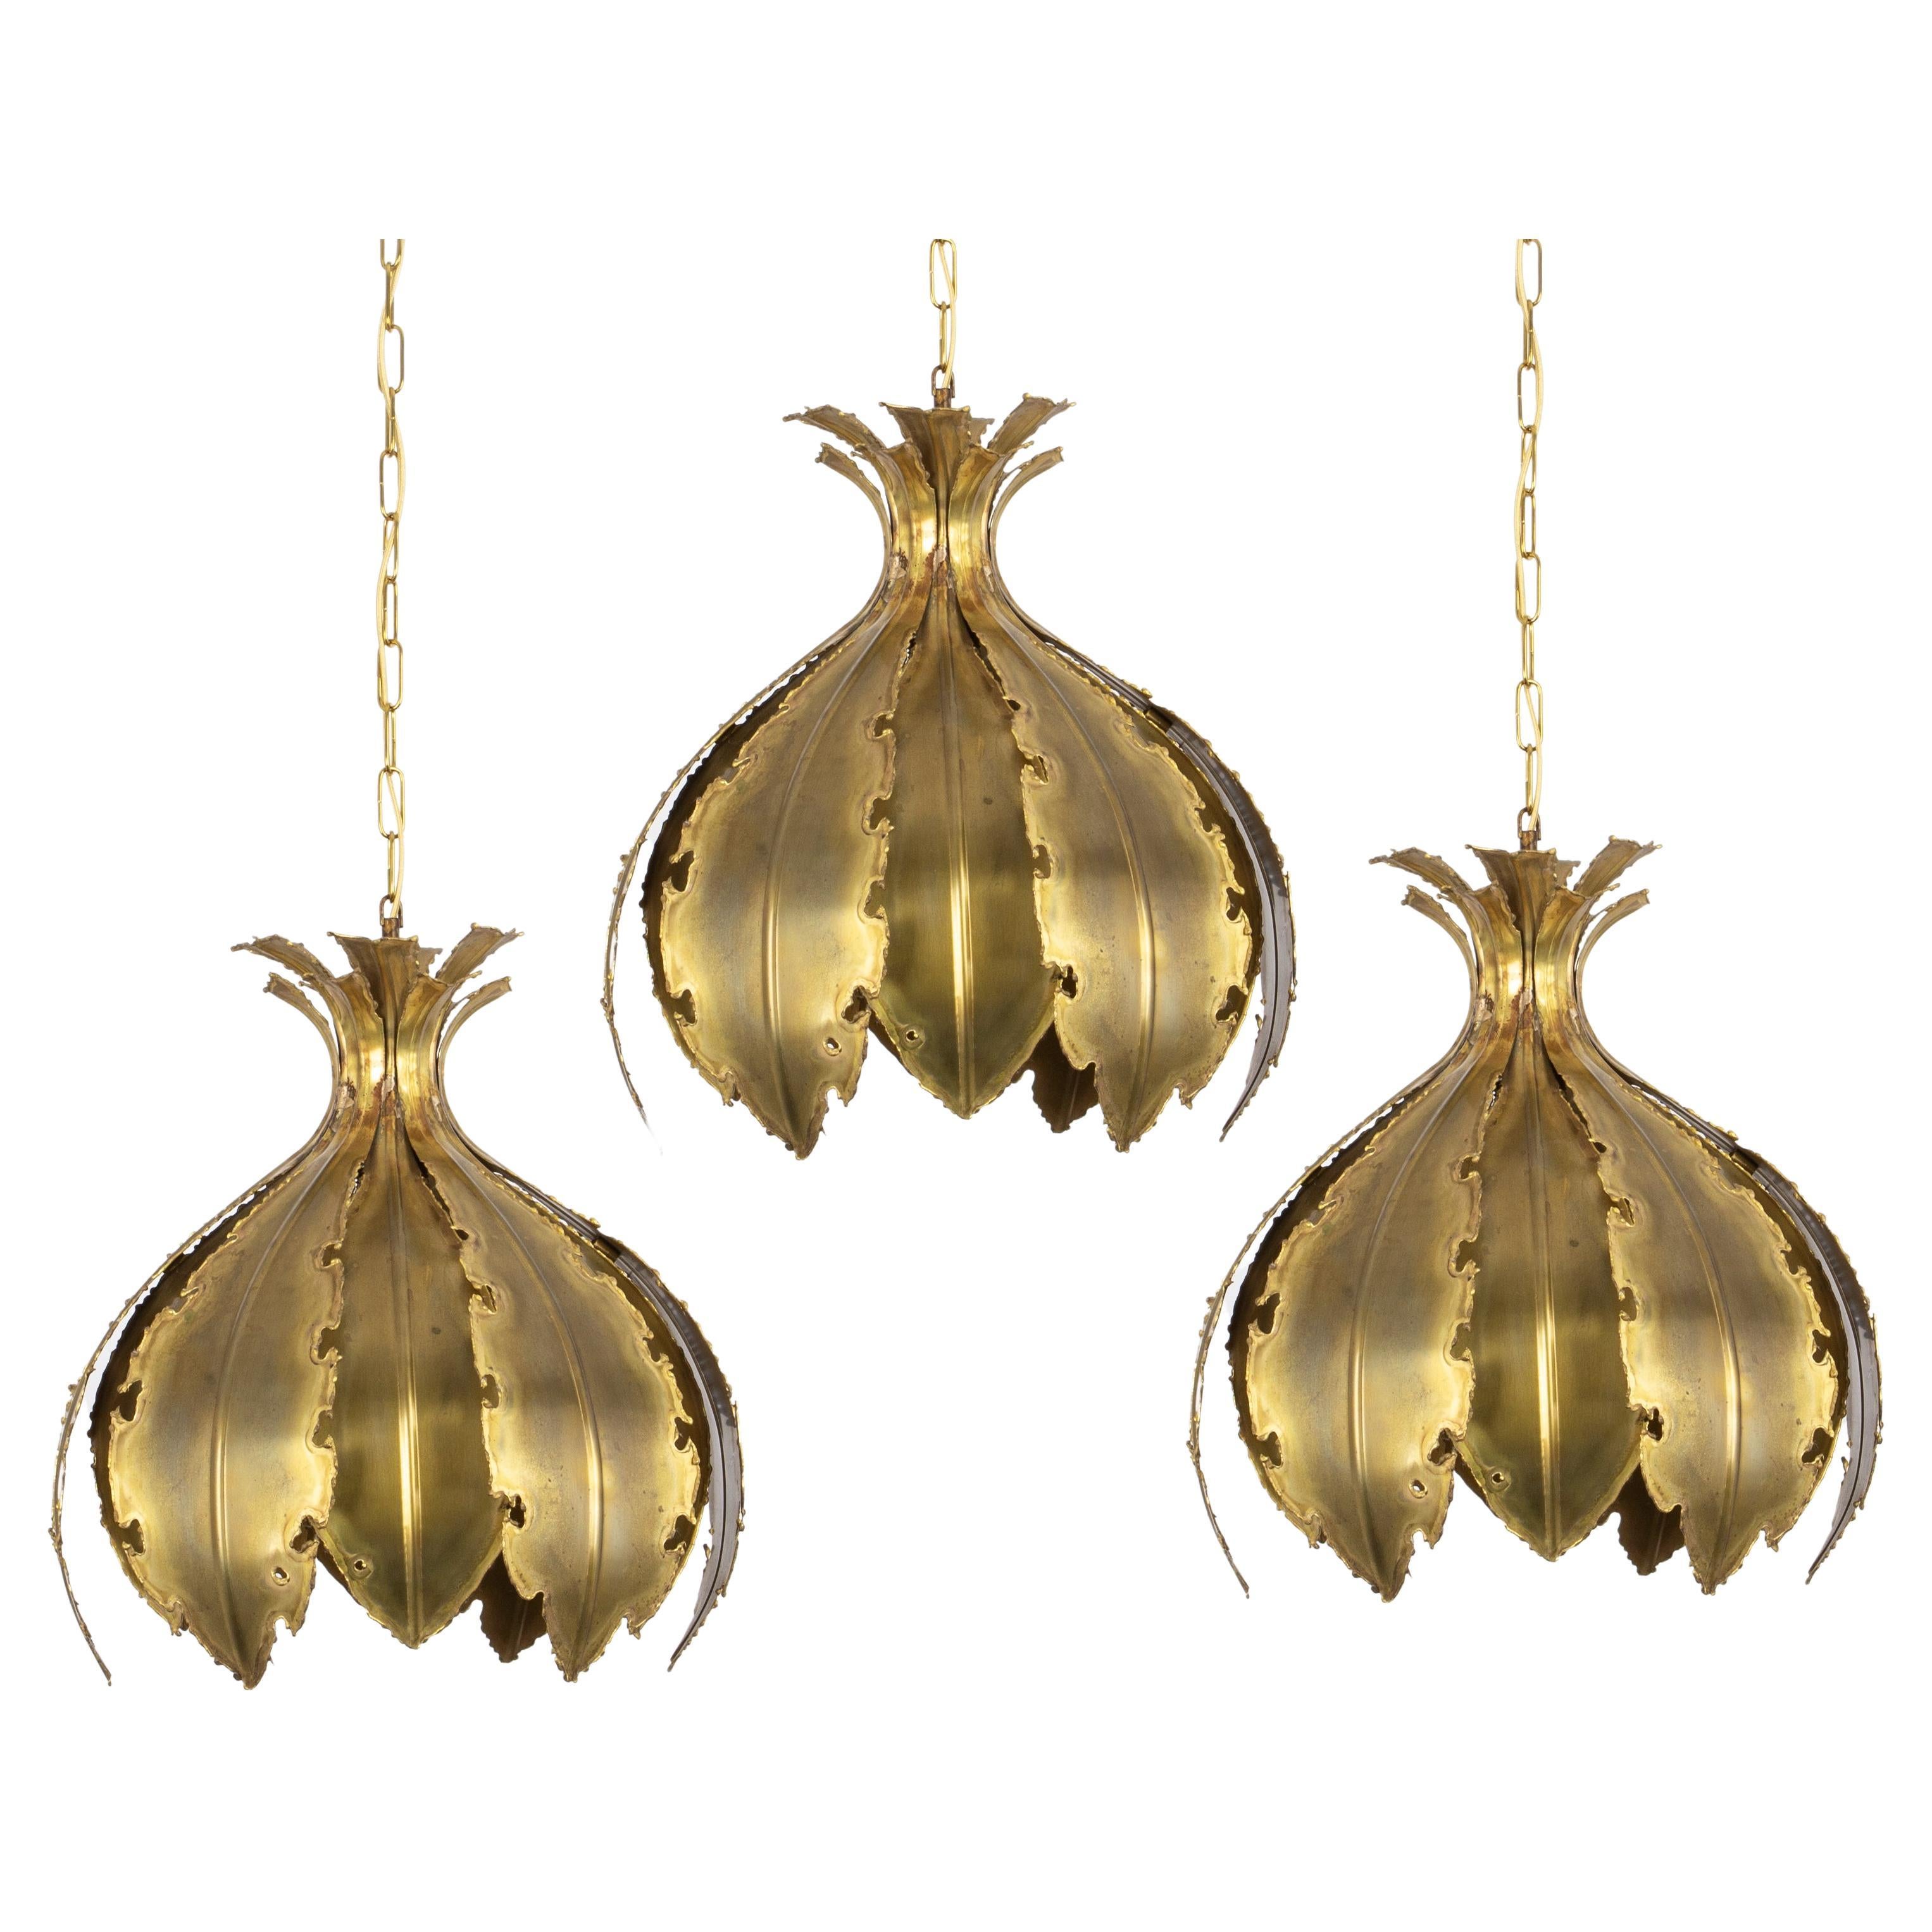 1 of 5 Stunning Brass Pendants designed svend Aage Holm Sørensen, Denmark, 1960s (pendentifs en laiton) en vente